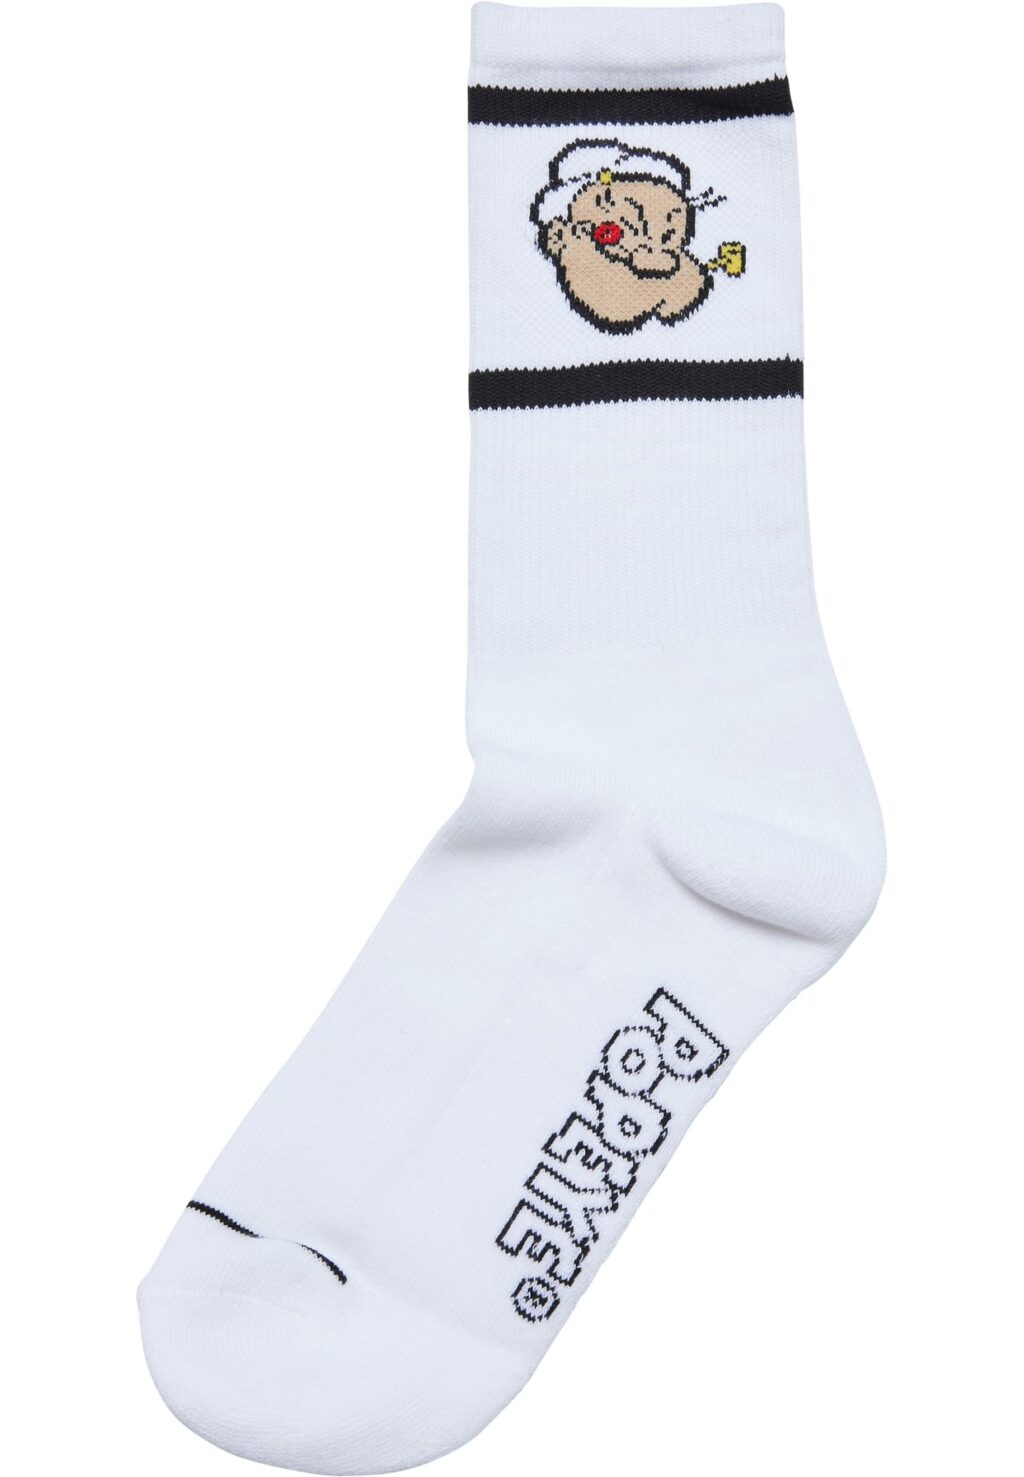 Popeye Socks 2-Pack heathergrey/white MC806